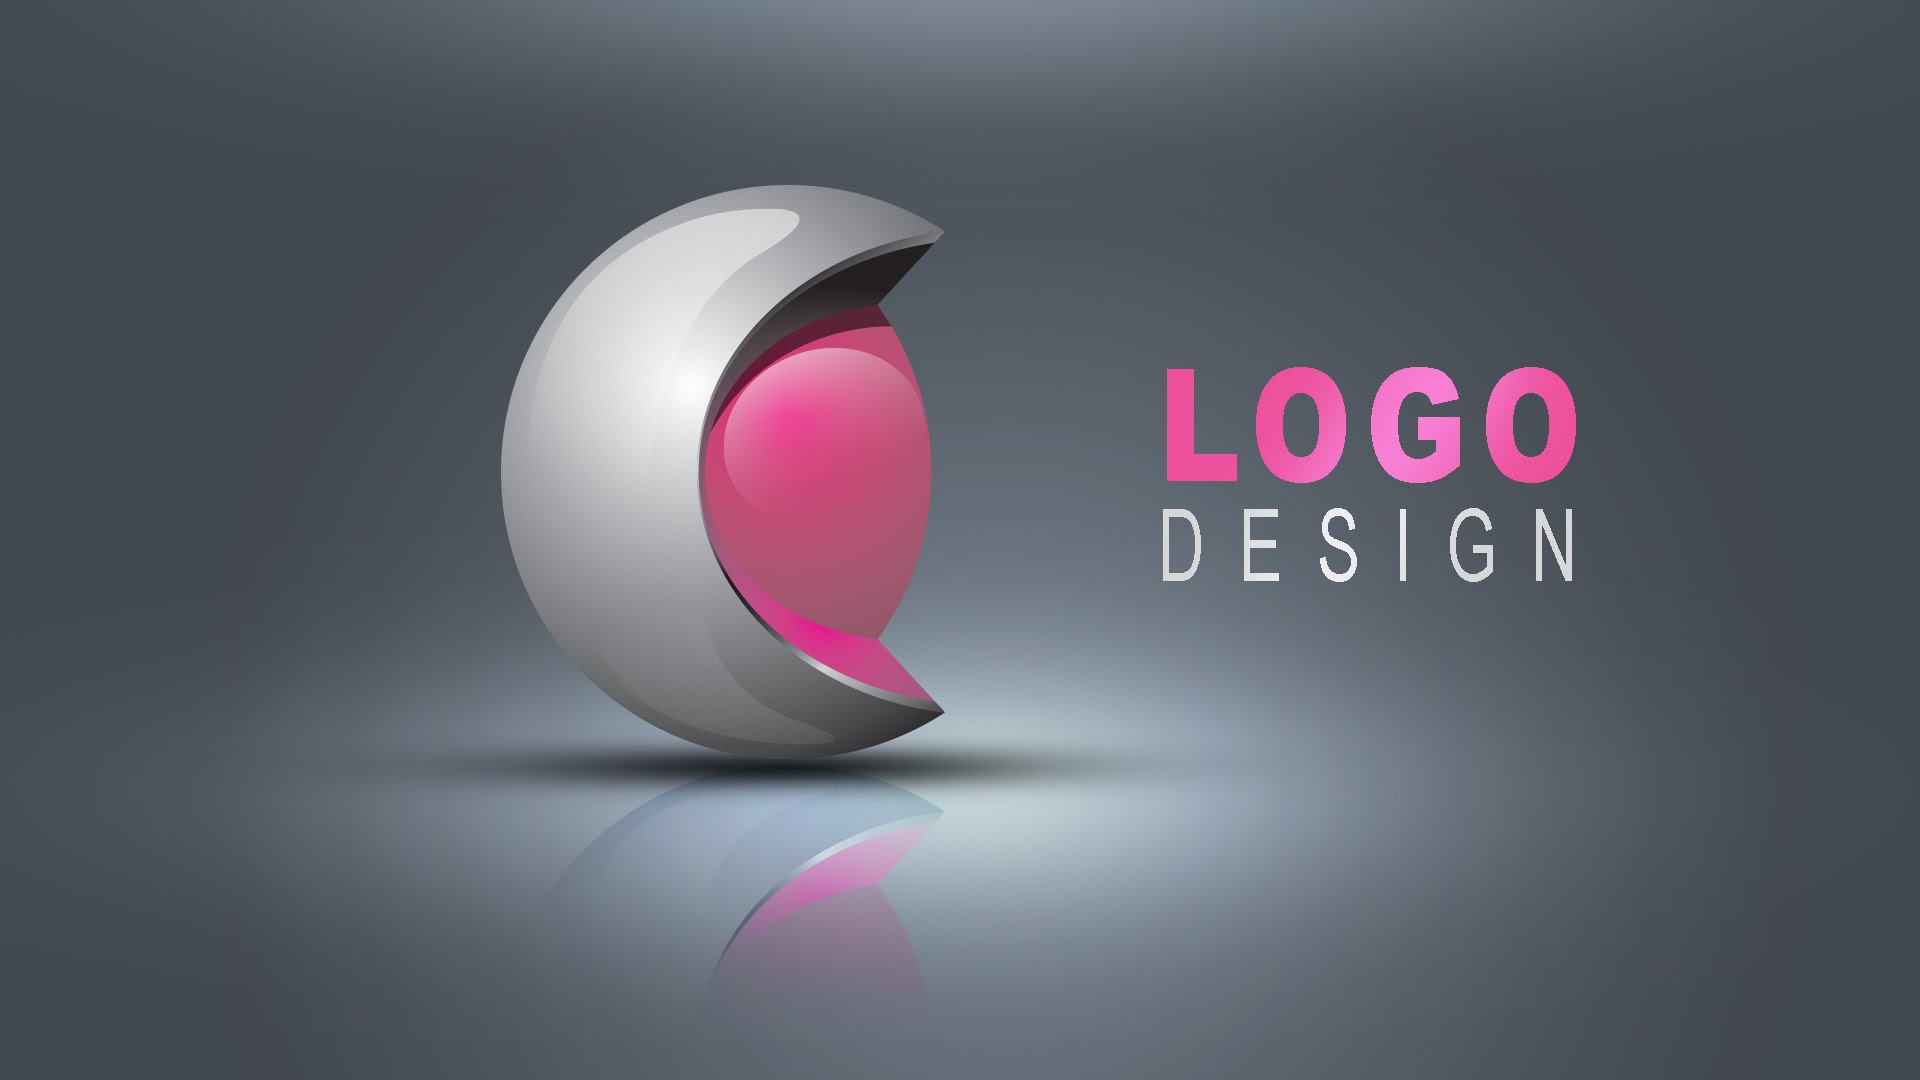 professional logo design in photoshop